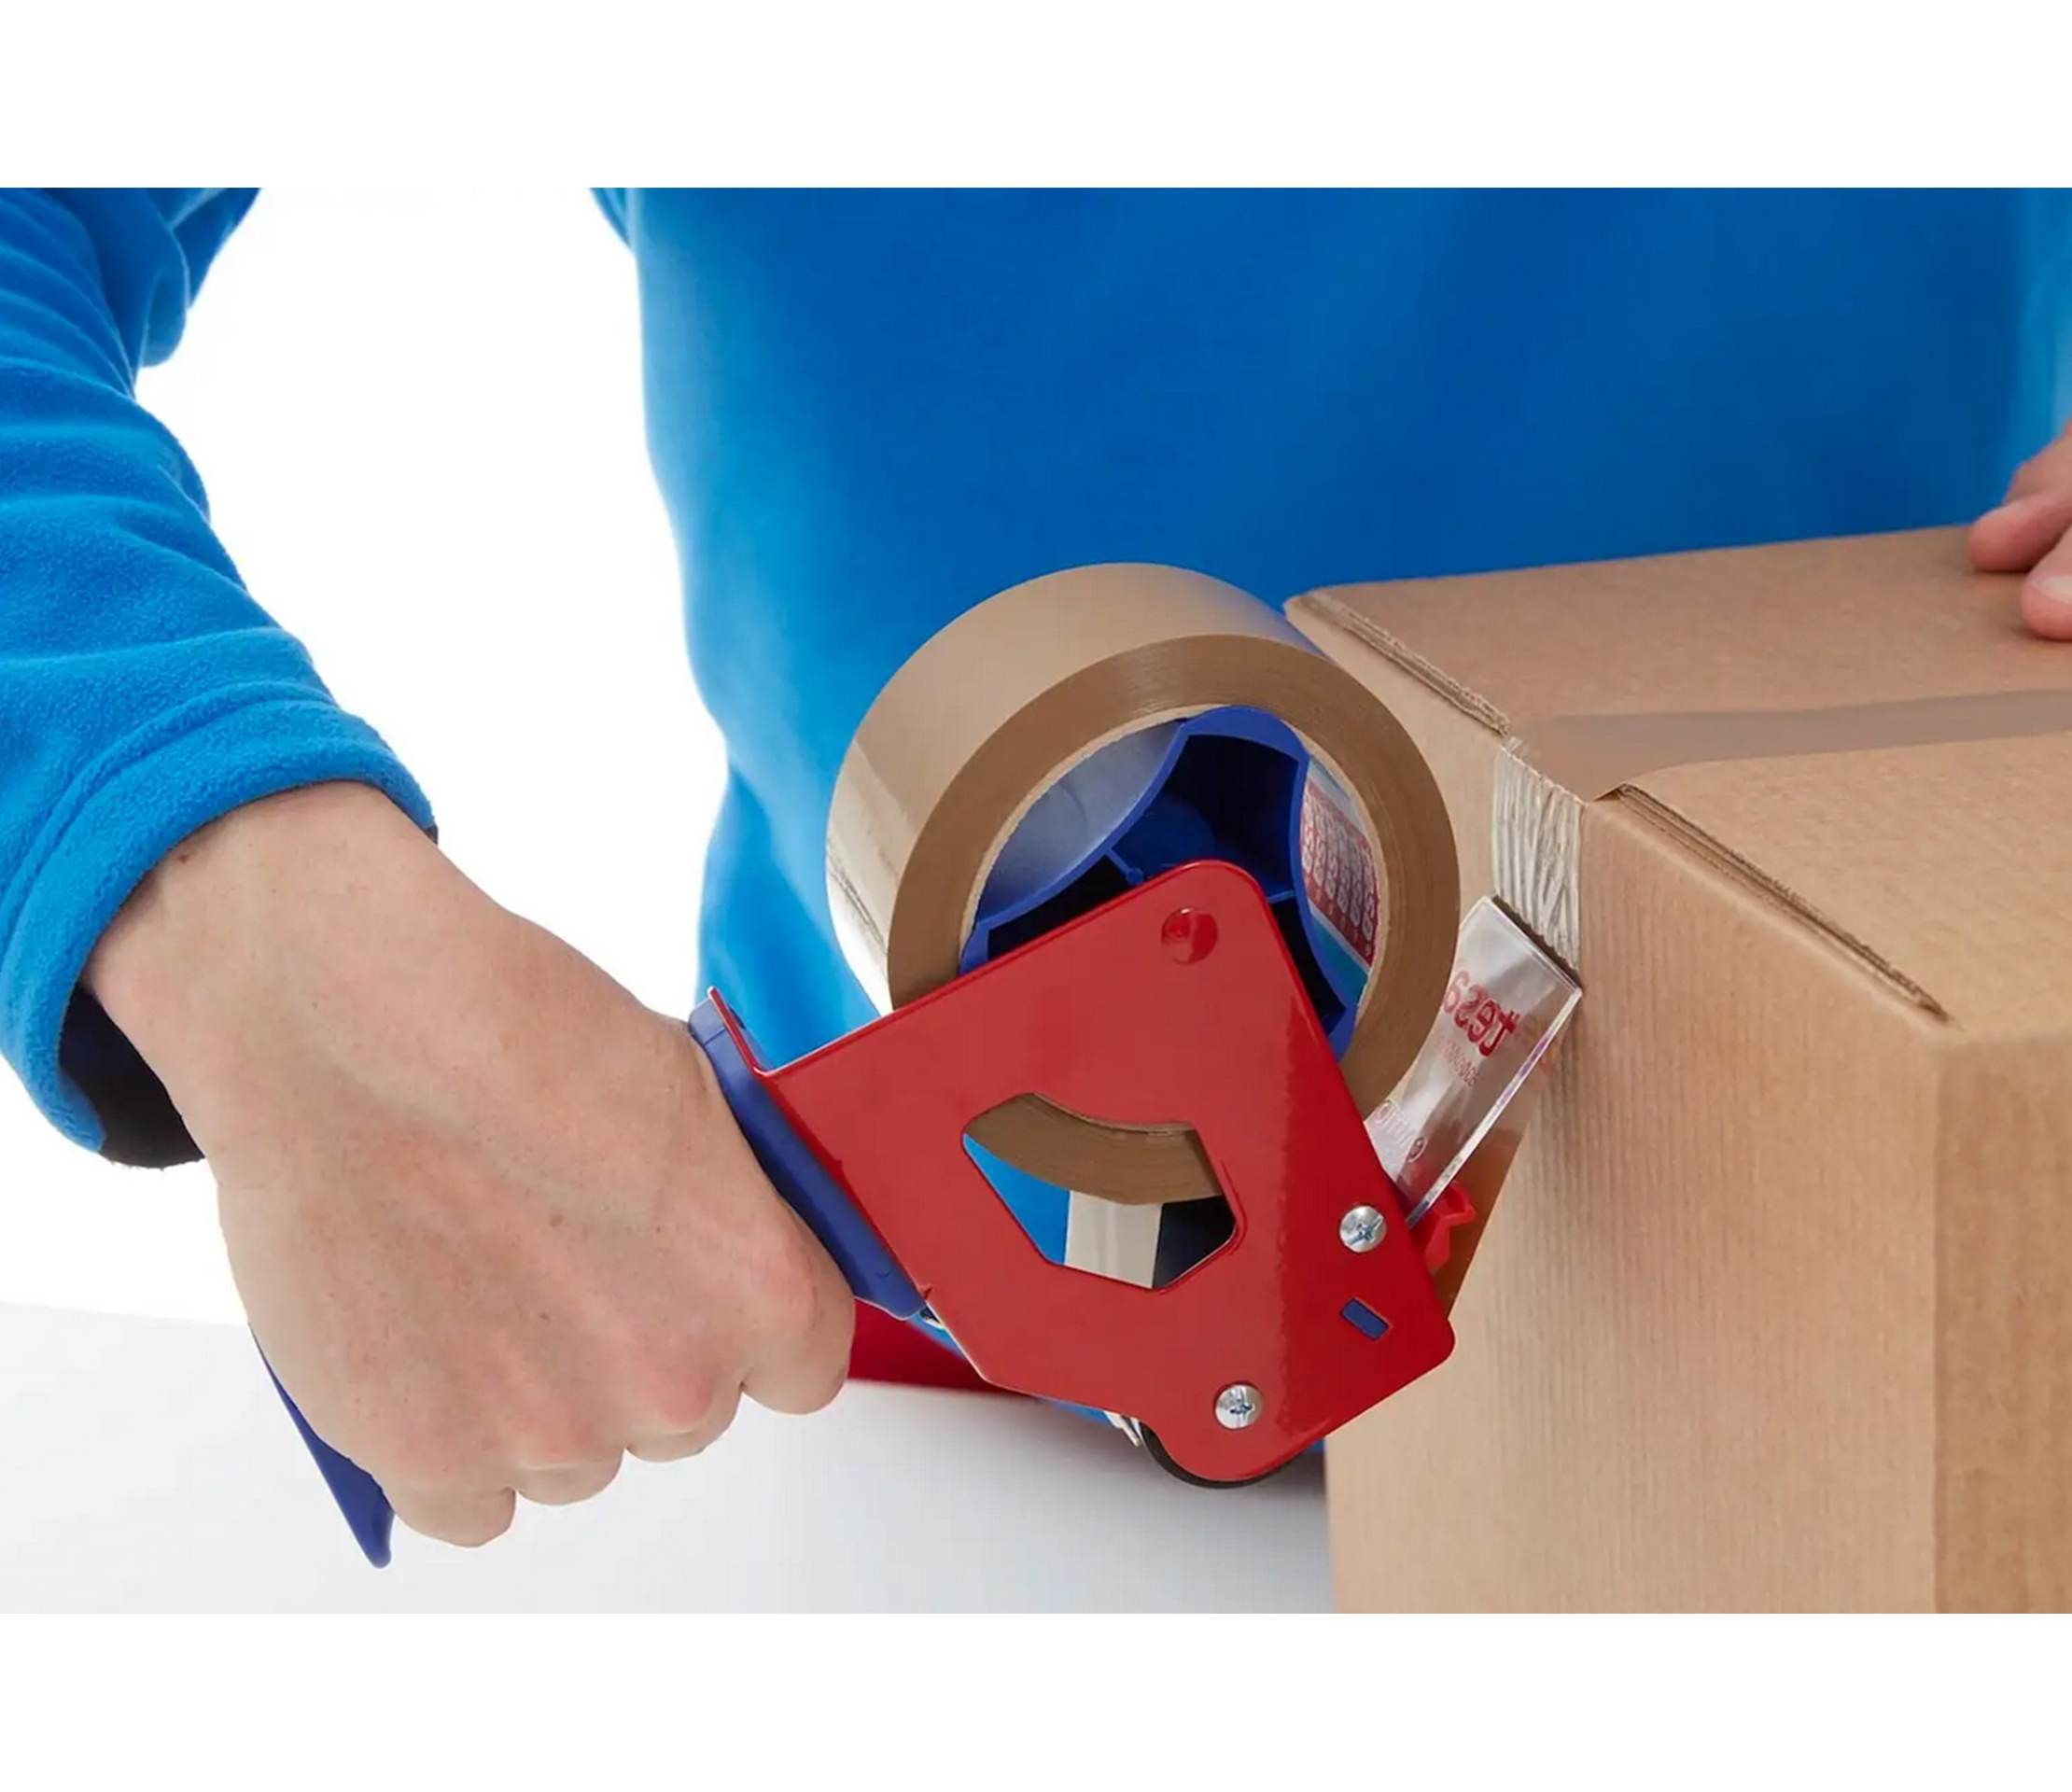 Packband Handabroller 6400 Comfort + tesapack® 4124